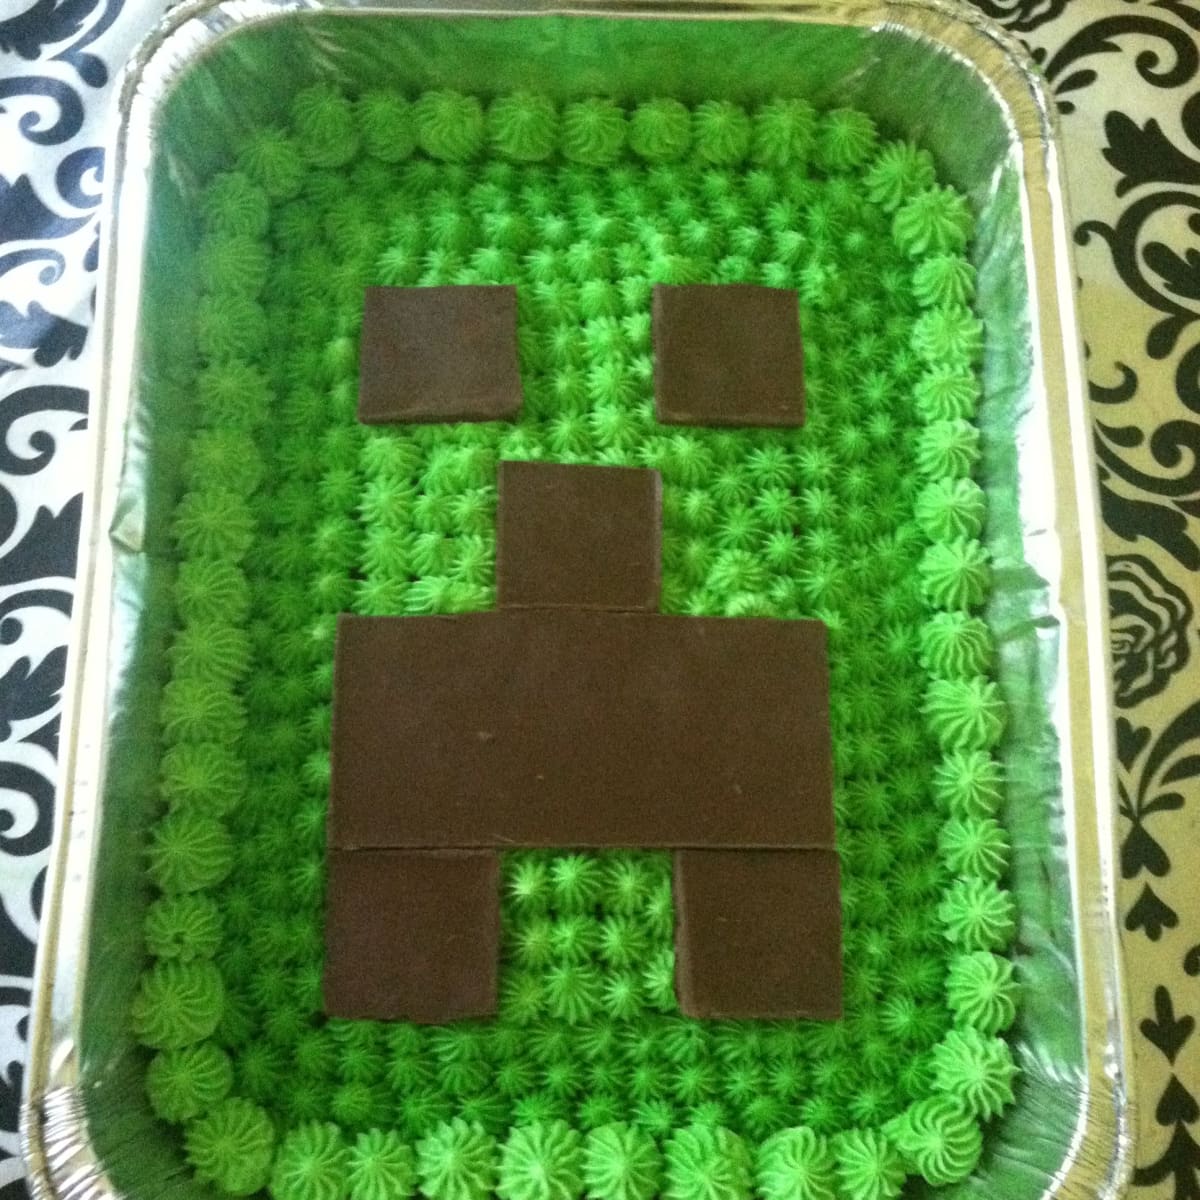 Minecraft drip cake – The Cupcake Factory